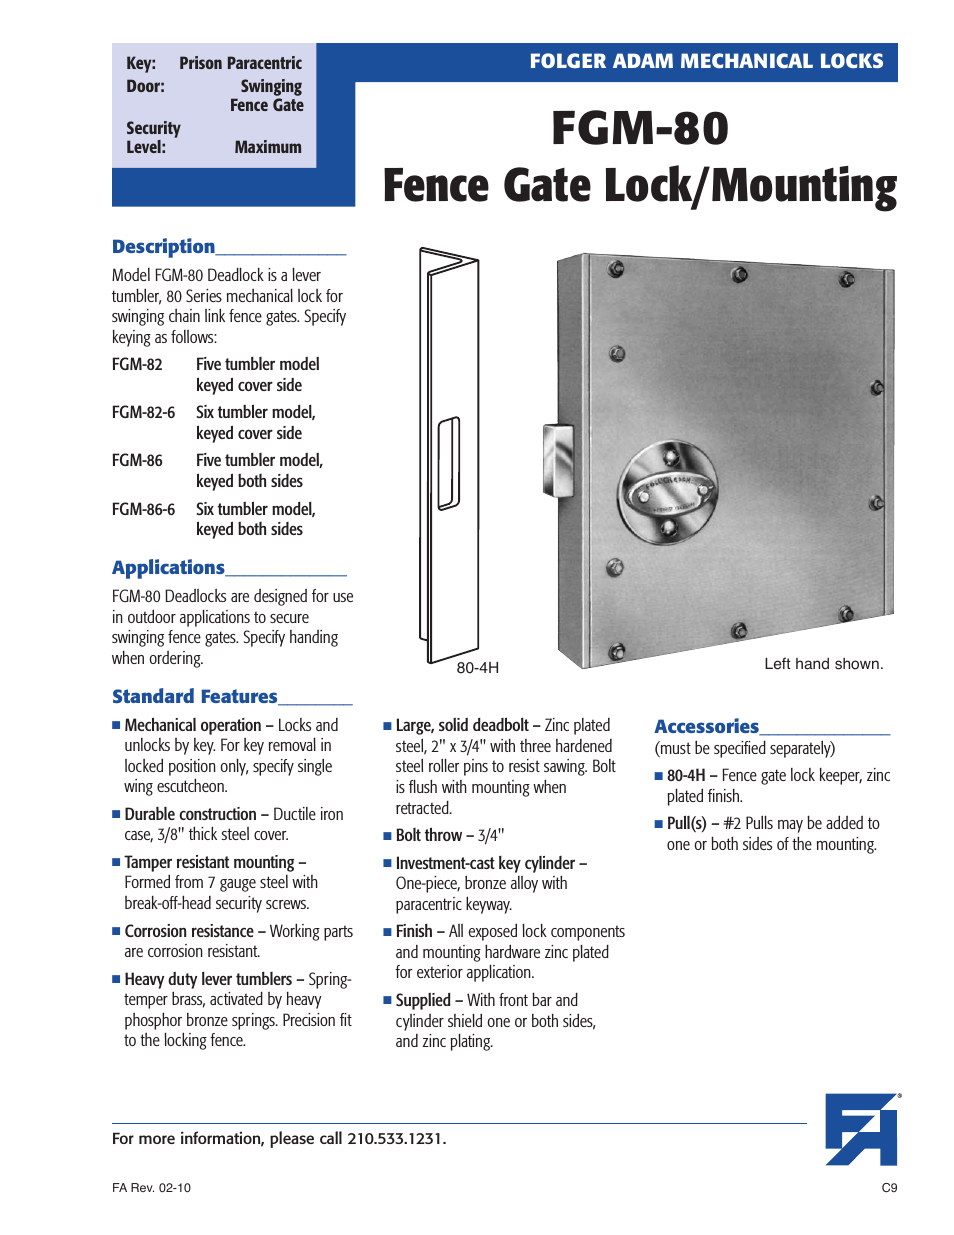 FGM-80 Fence Gate Lock_Mounting